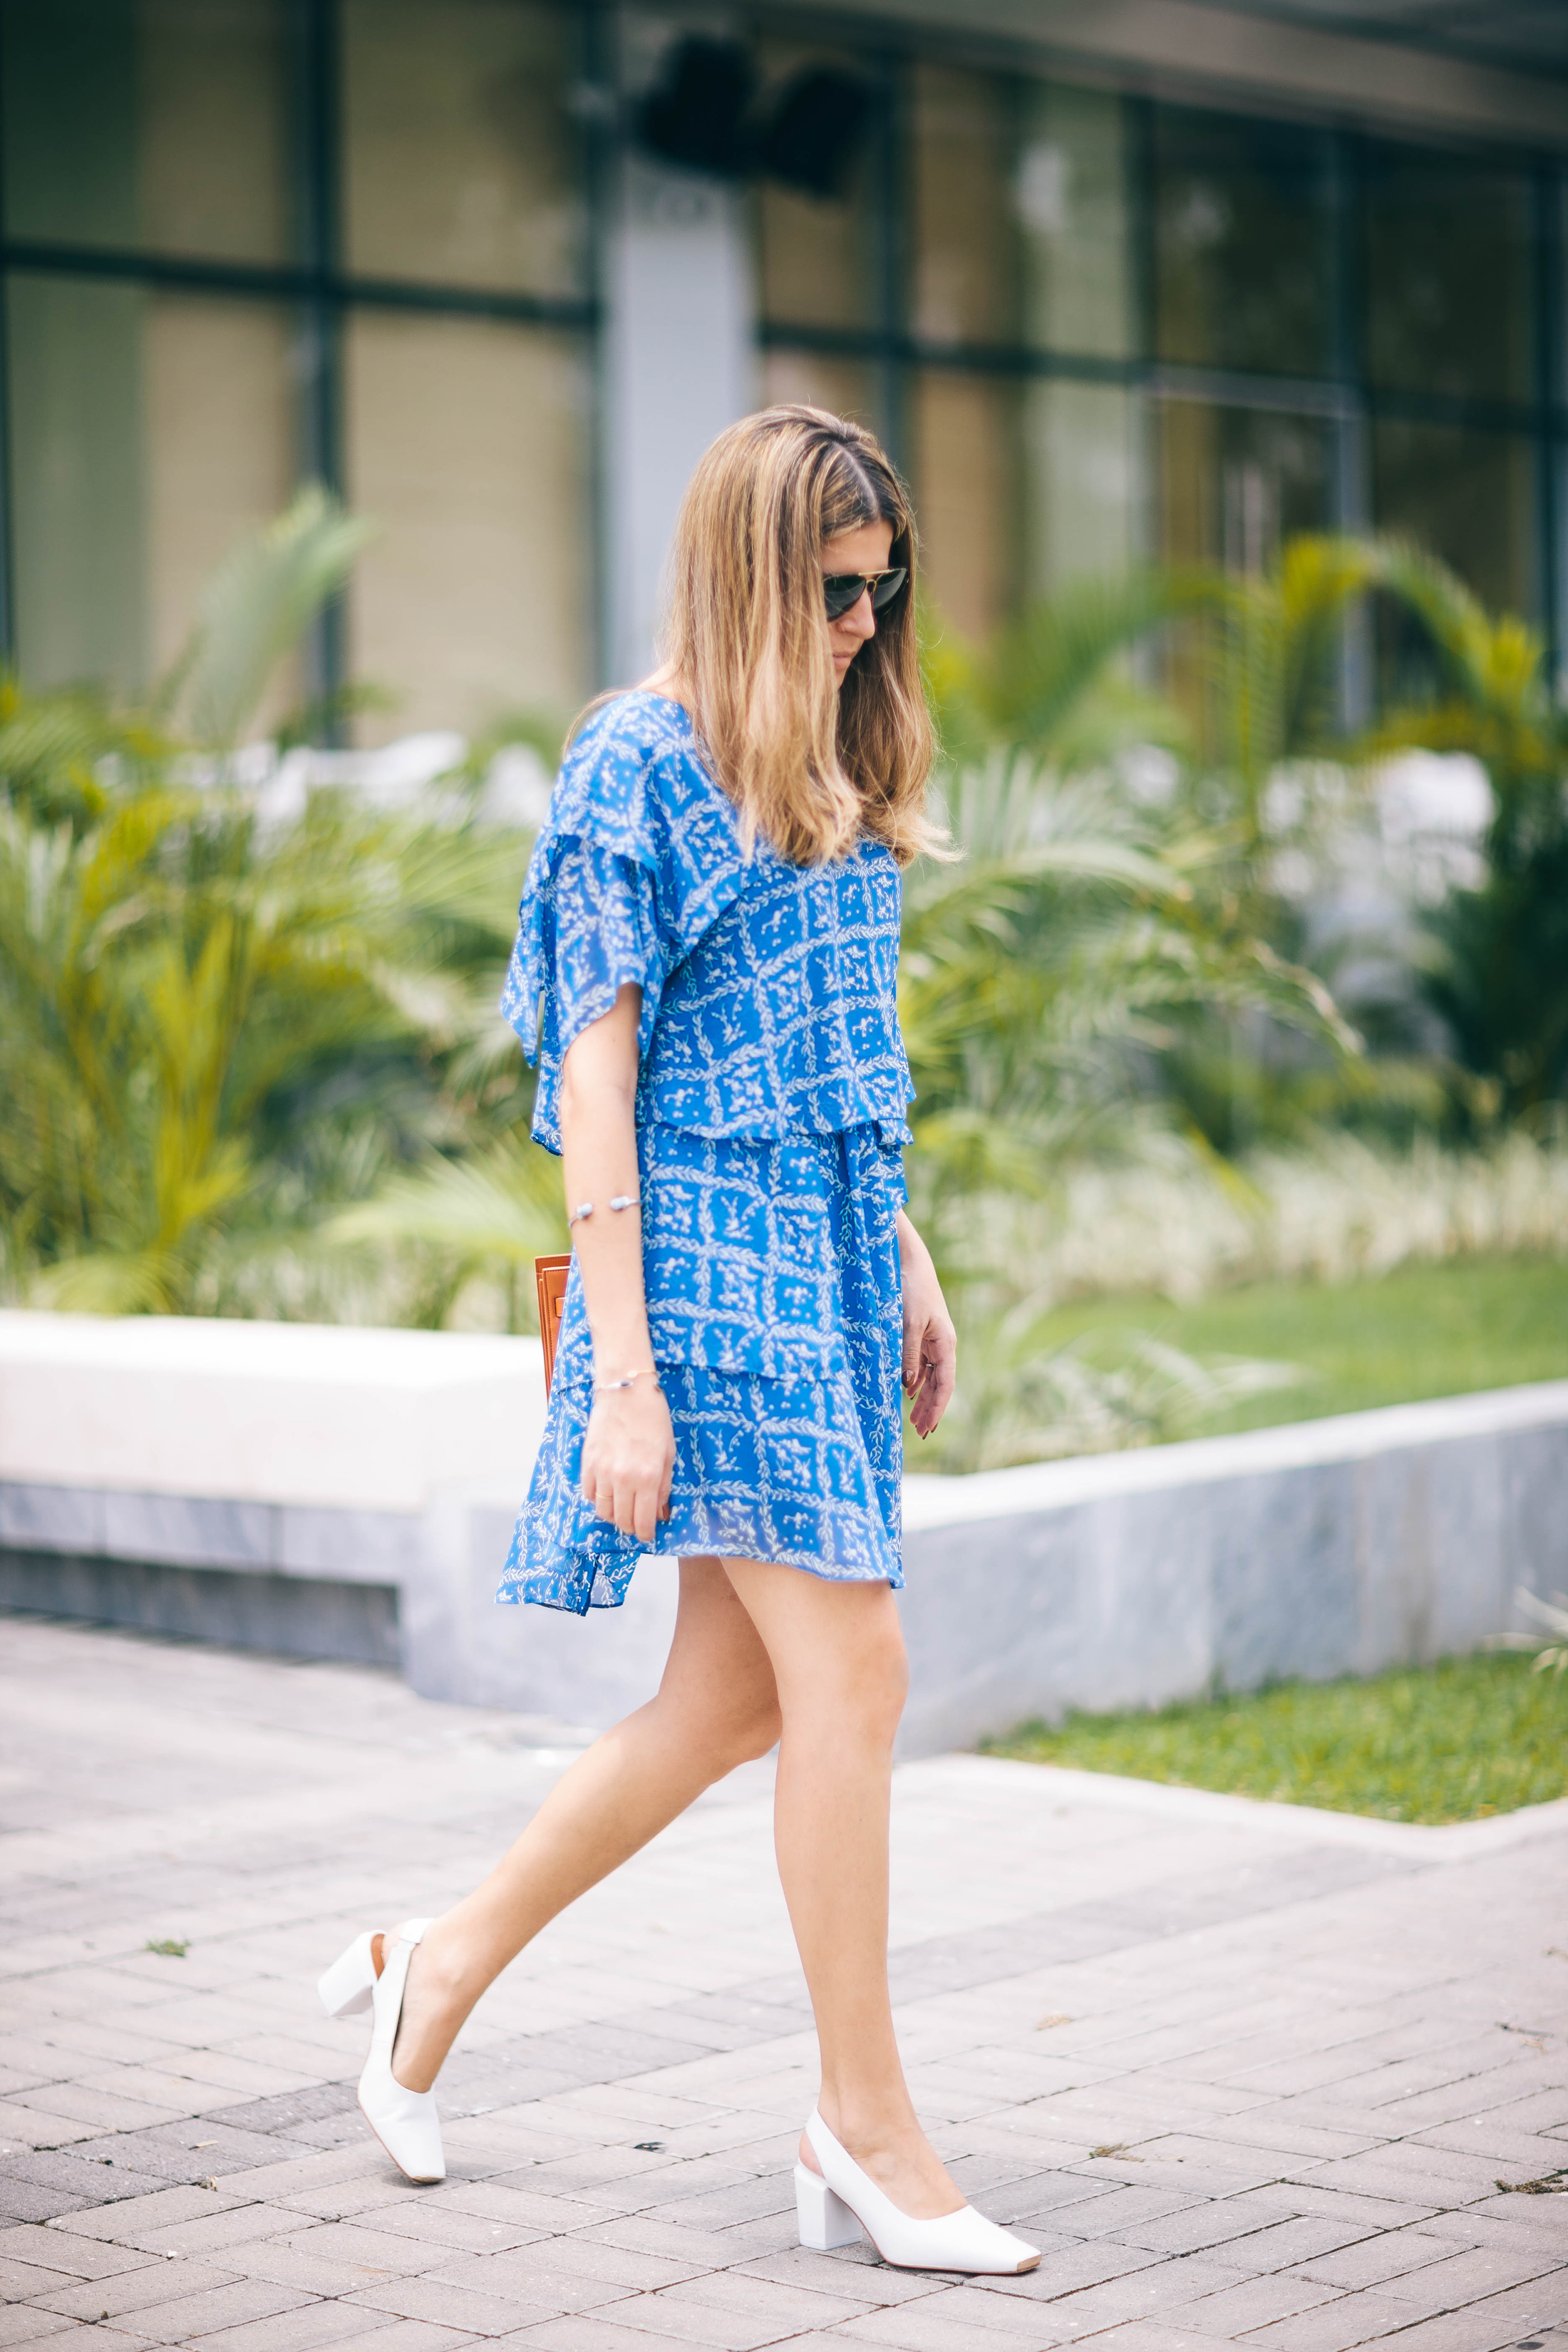 Style blogger Maristella in a ruffled chiffon dress and white square toe heels